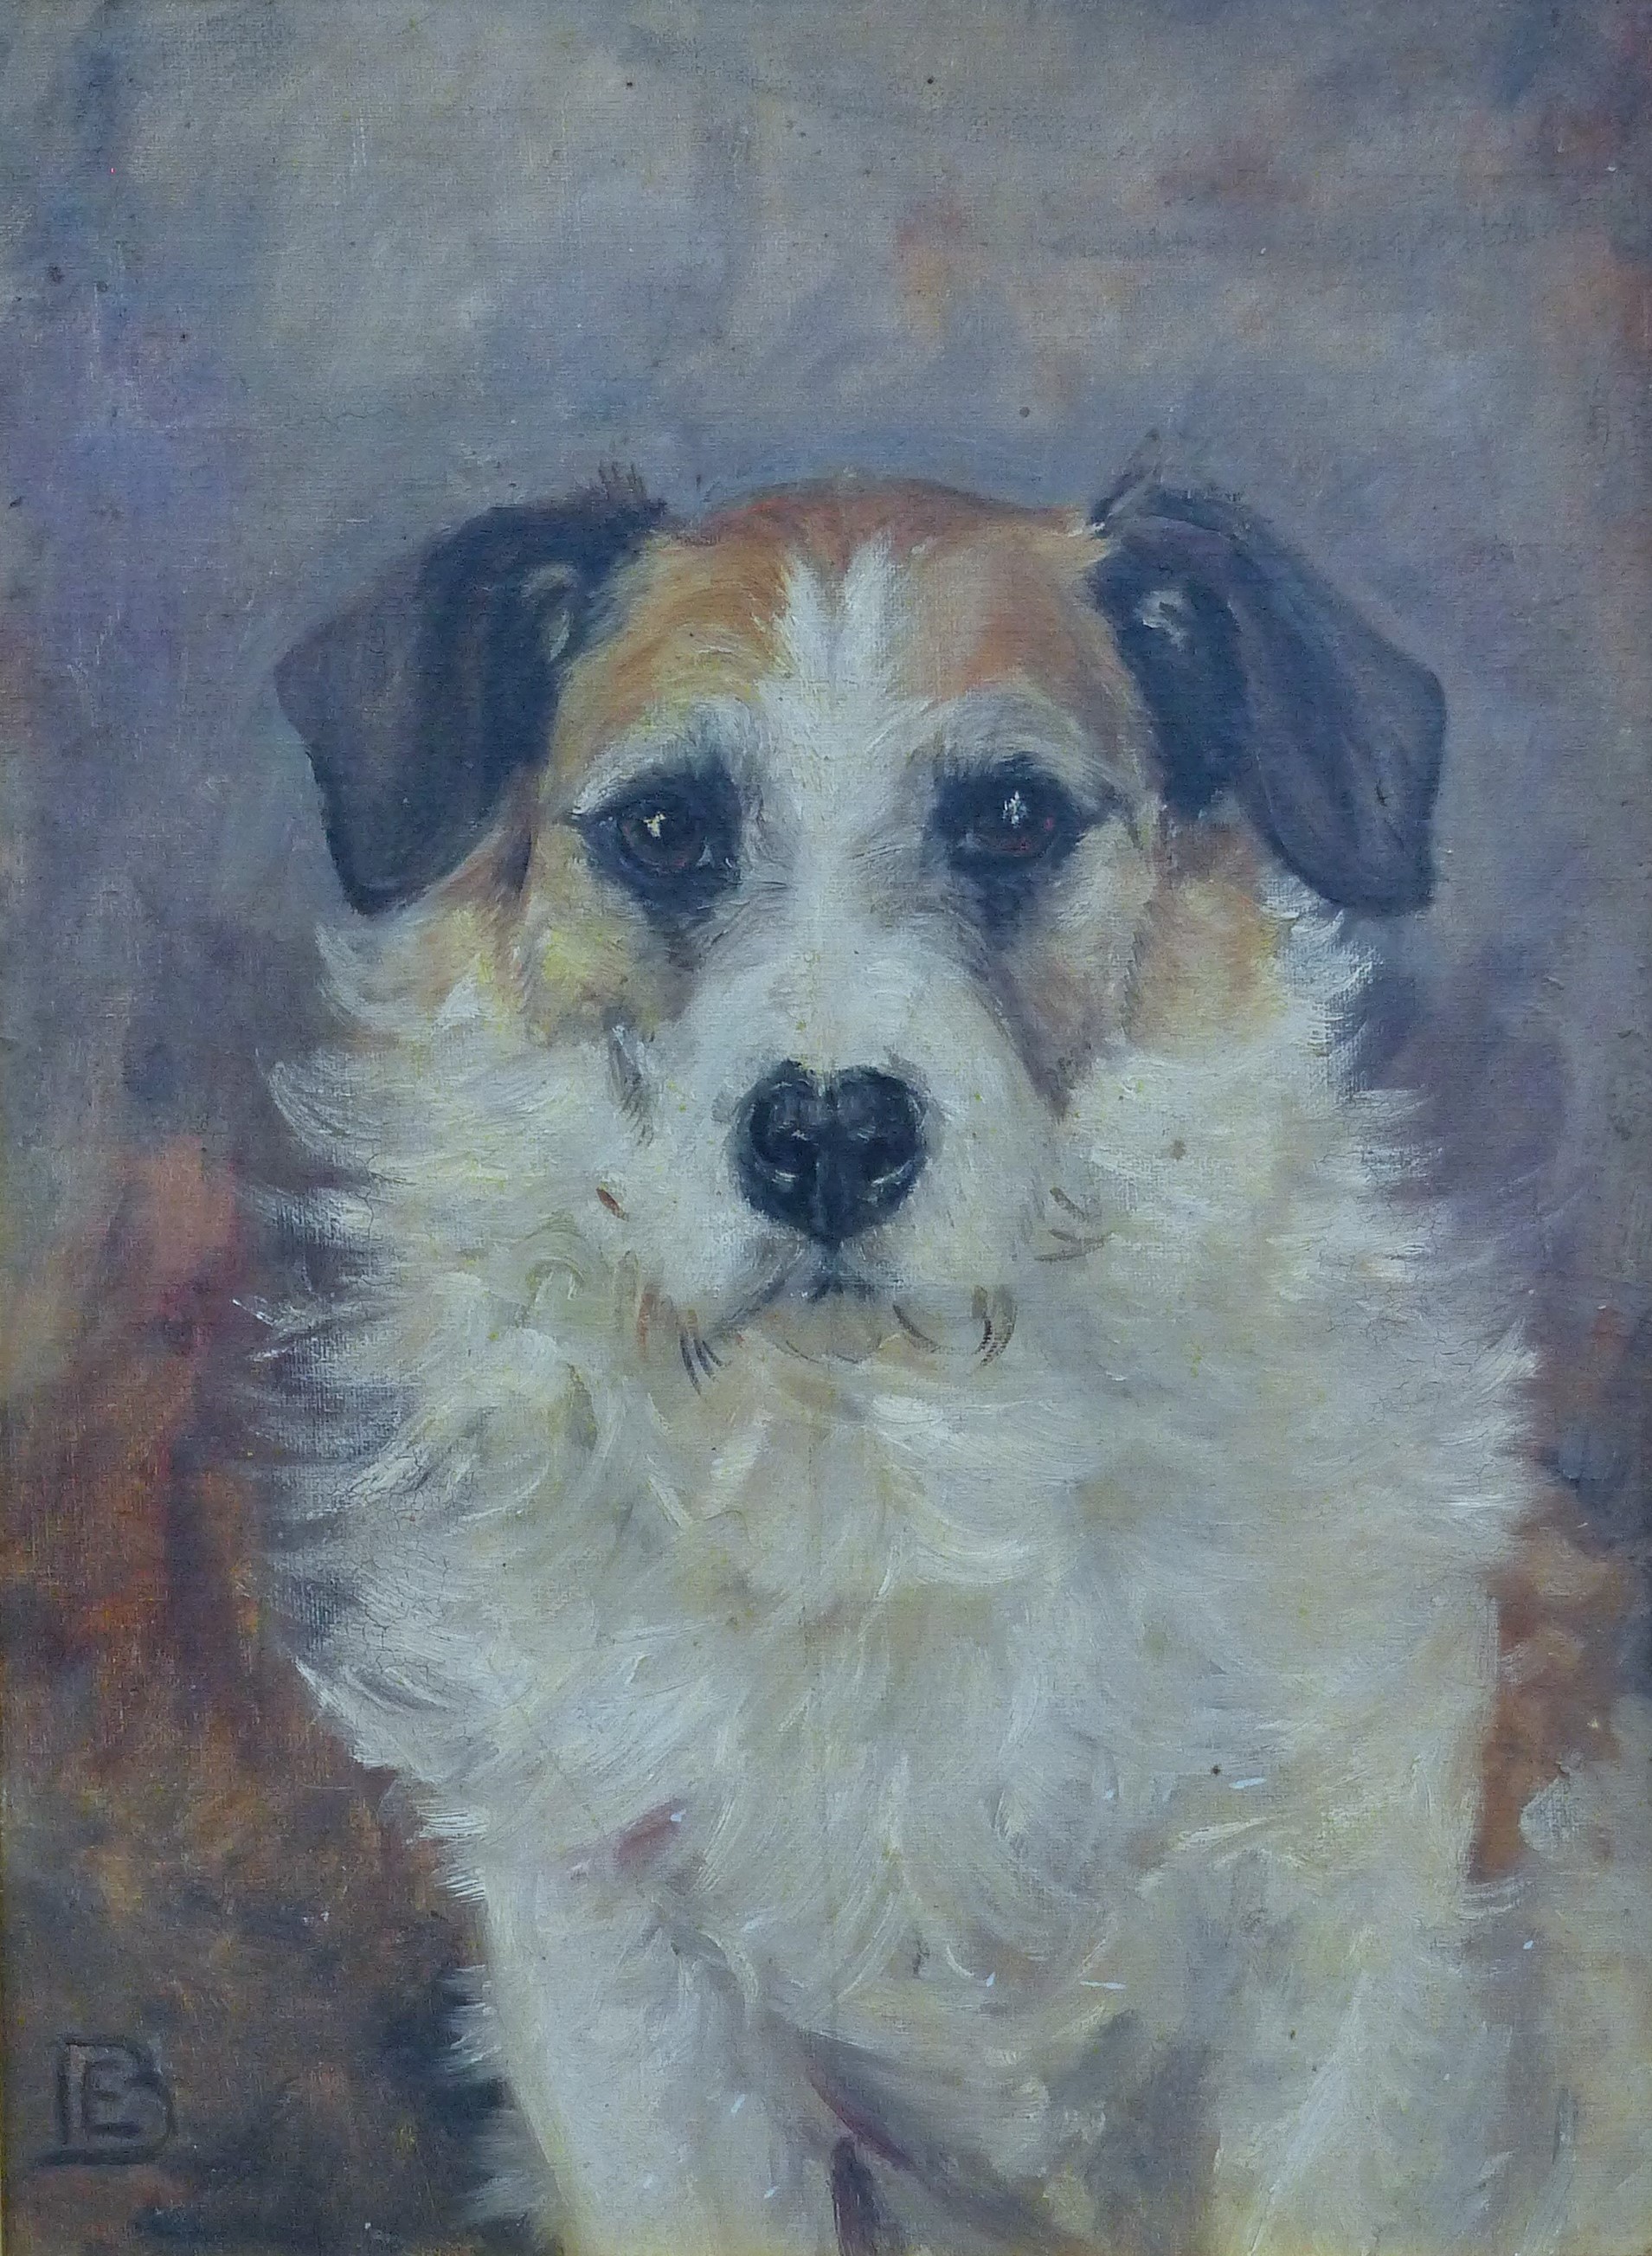 Seated Terrier, oil on board, initialled E.B, framed. 28 x 38.5 cm.